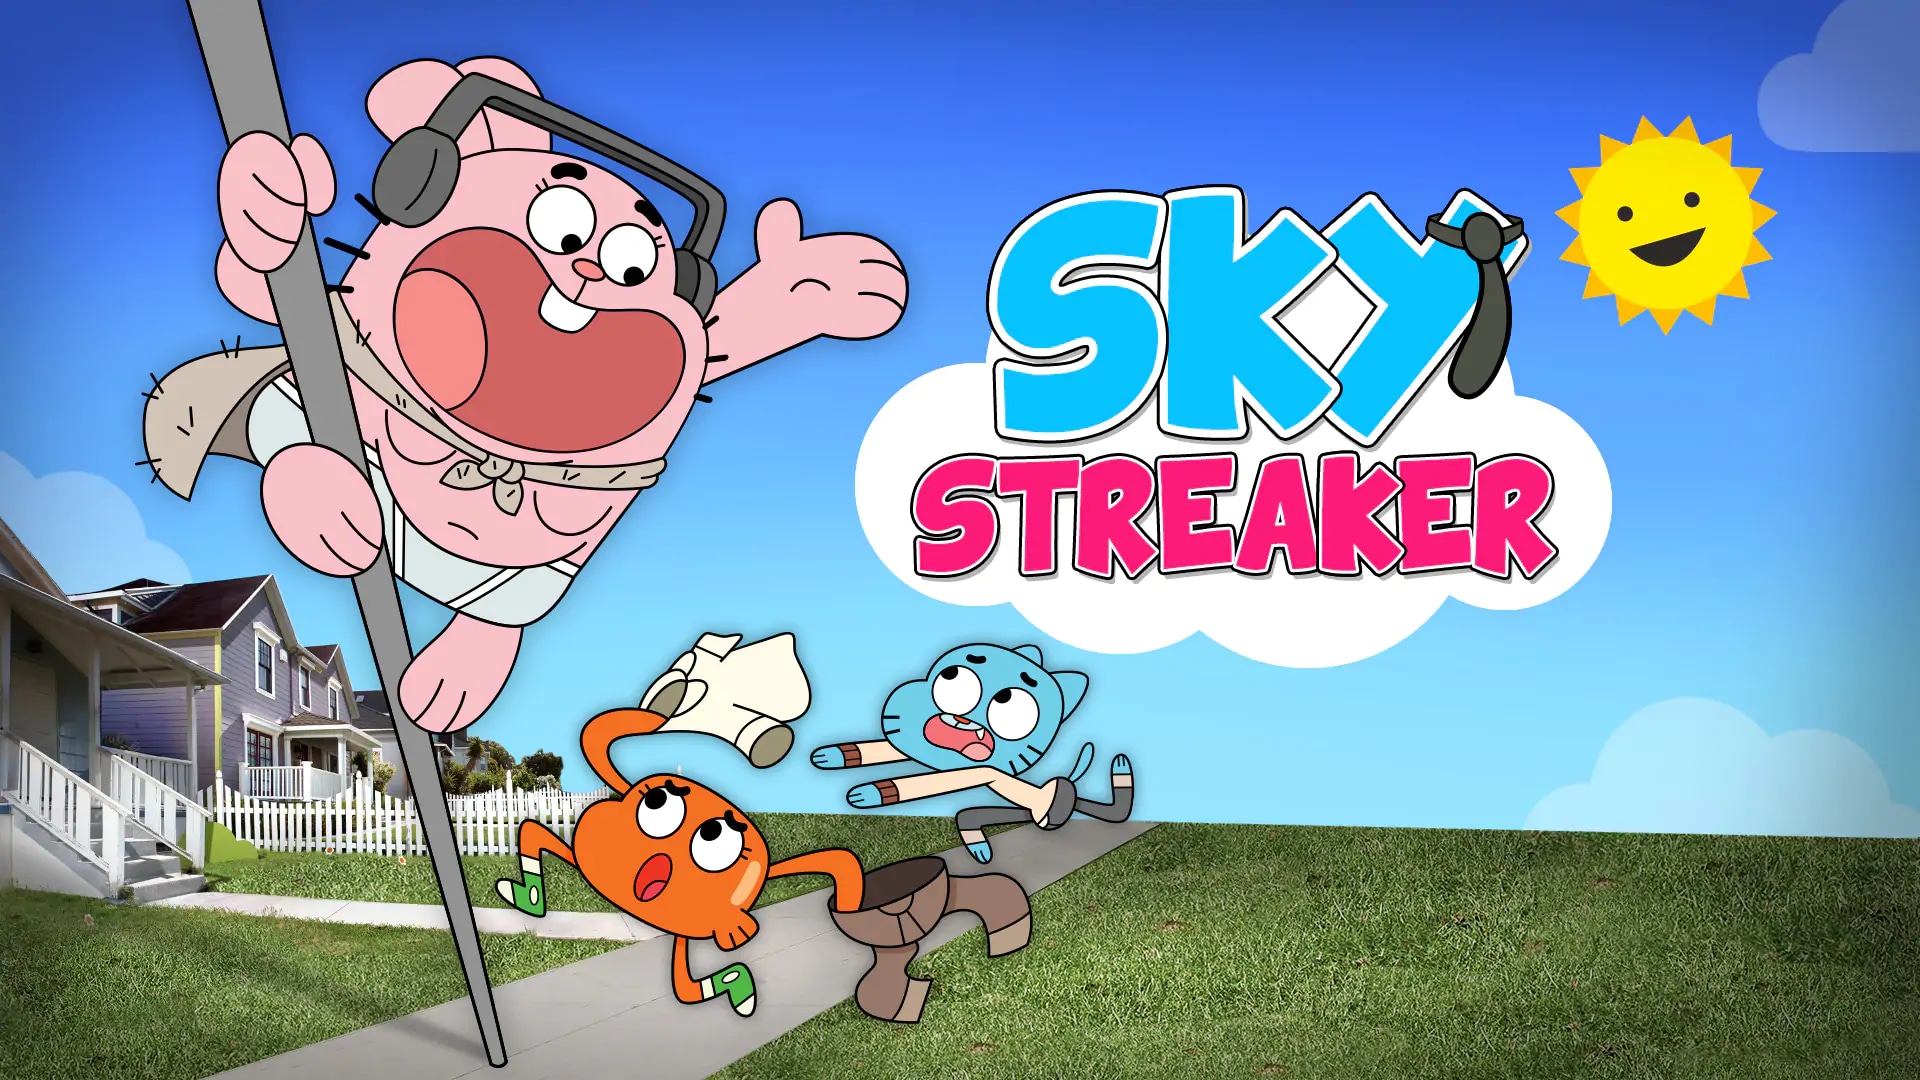 Sky Streaker, The Amazing World of Gumball Games